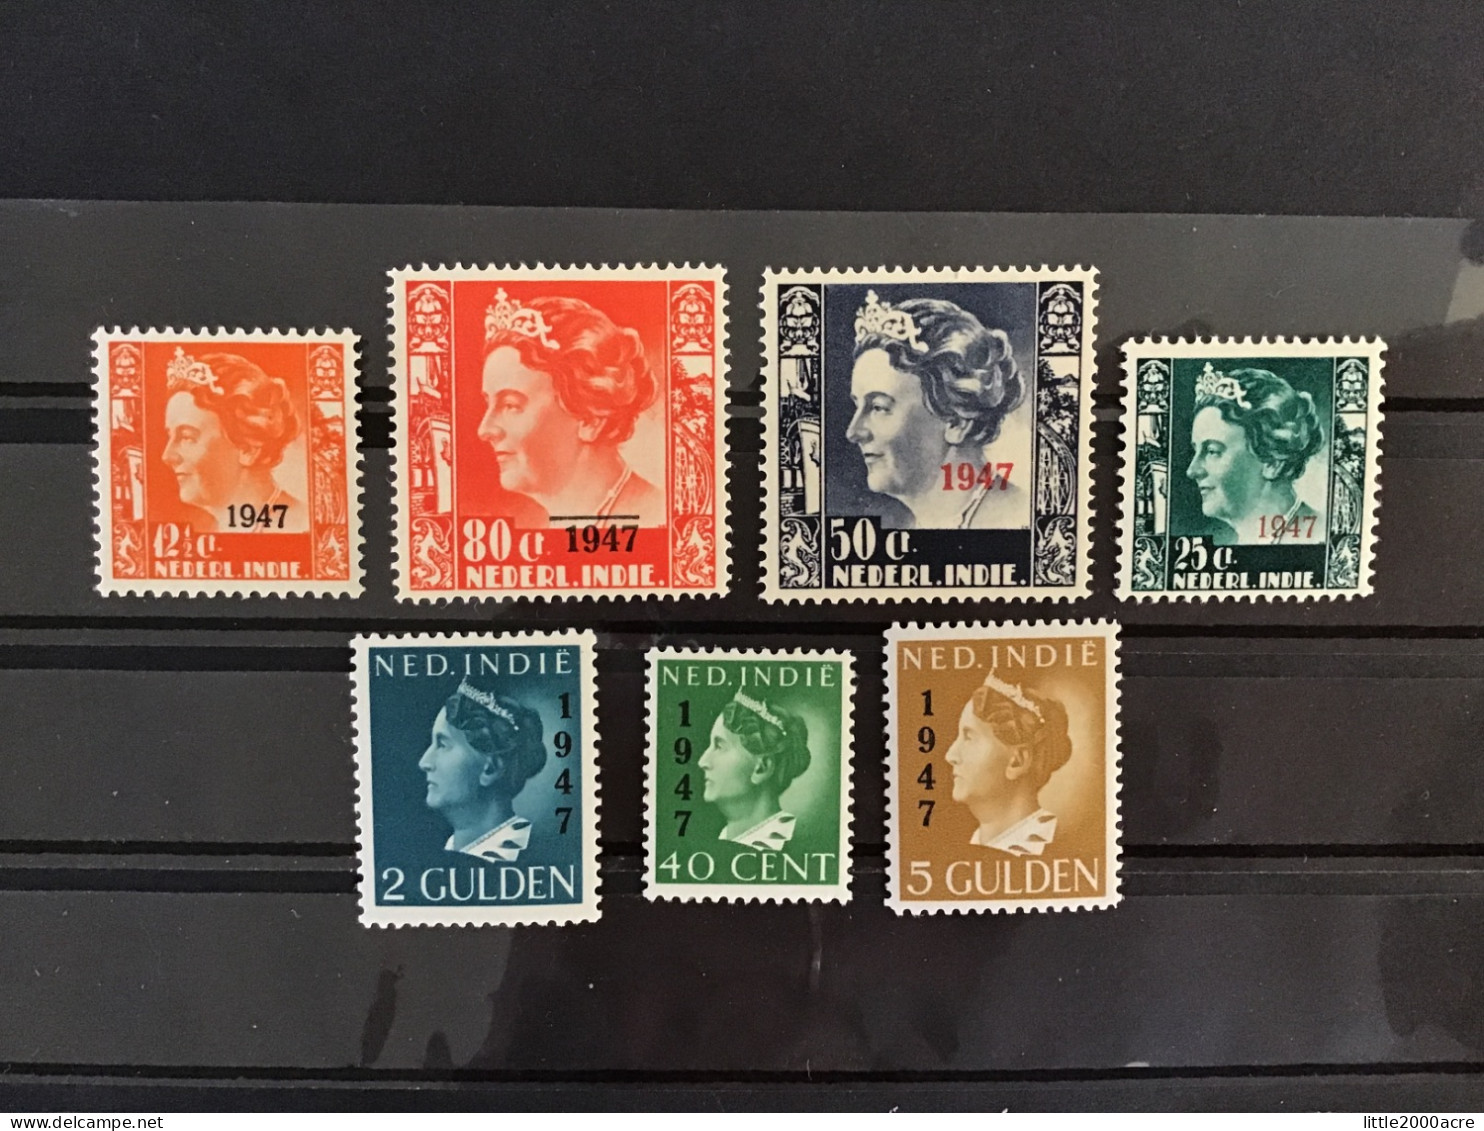 Netherland Indies 1947 Overprinted Set Mint SG 506-12 NVPH 326-32 - Netherlands Indies